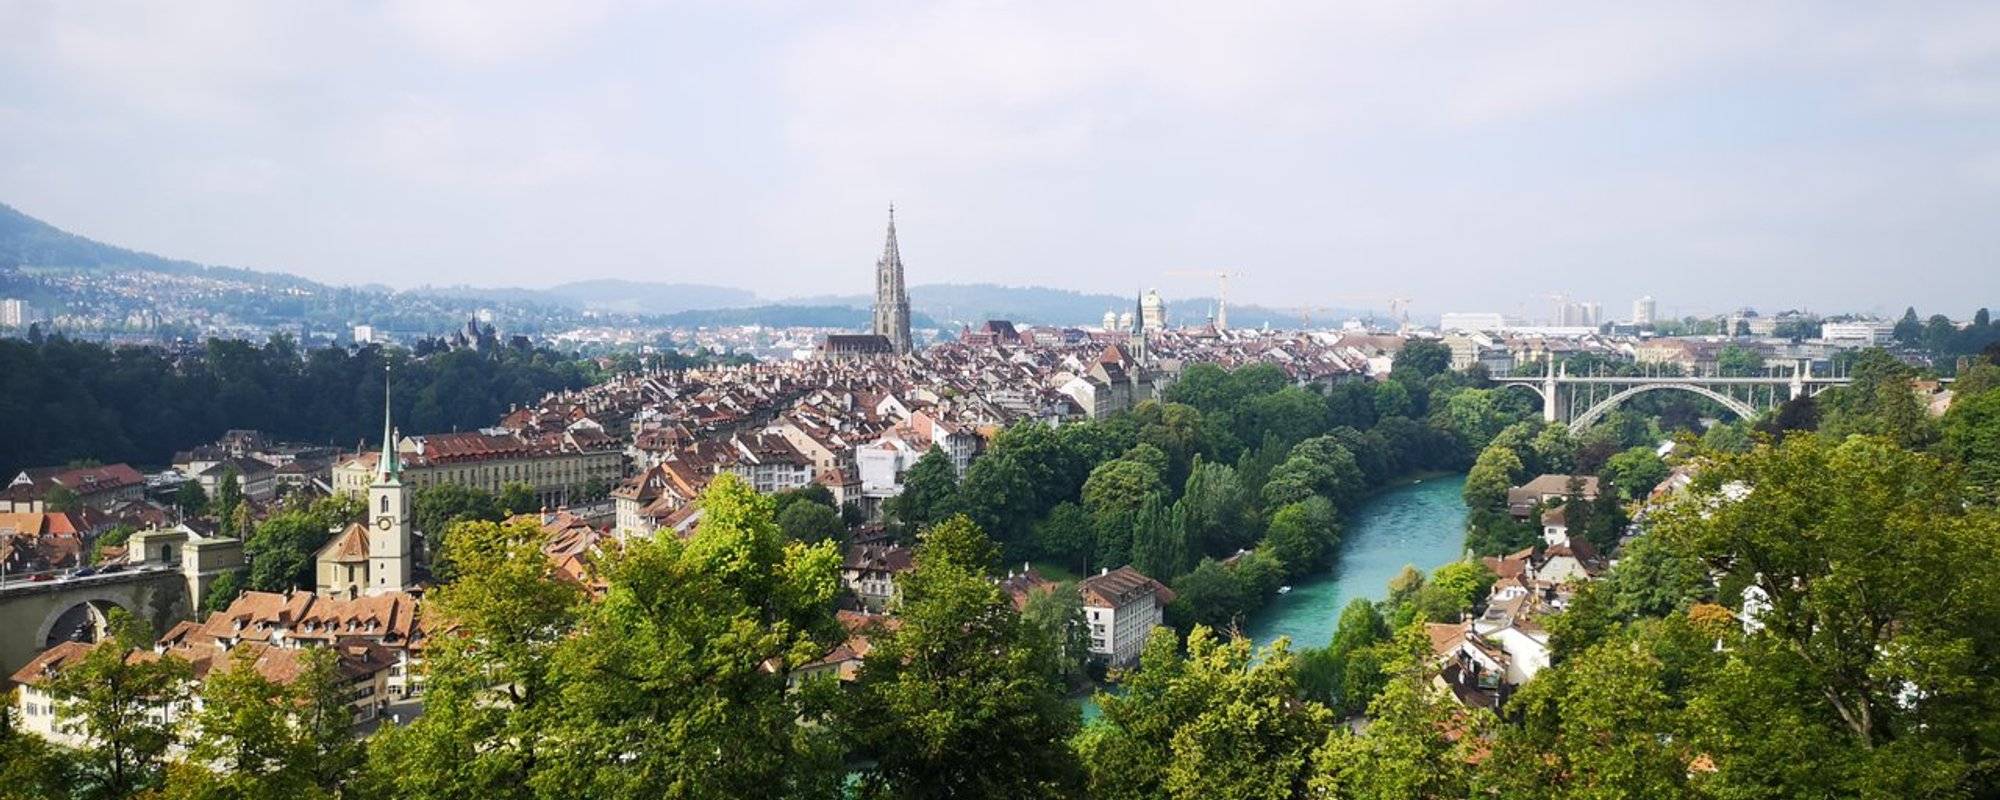 Bern - my beautiful city